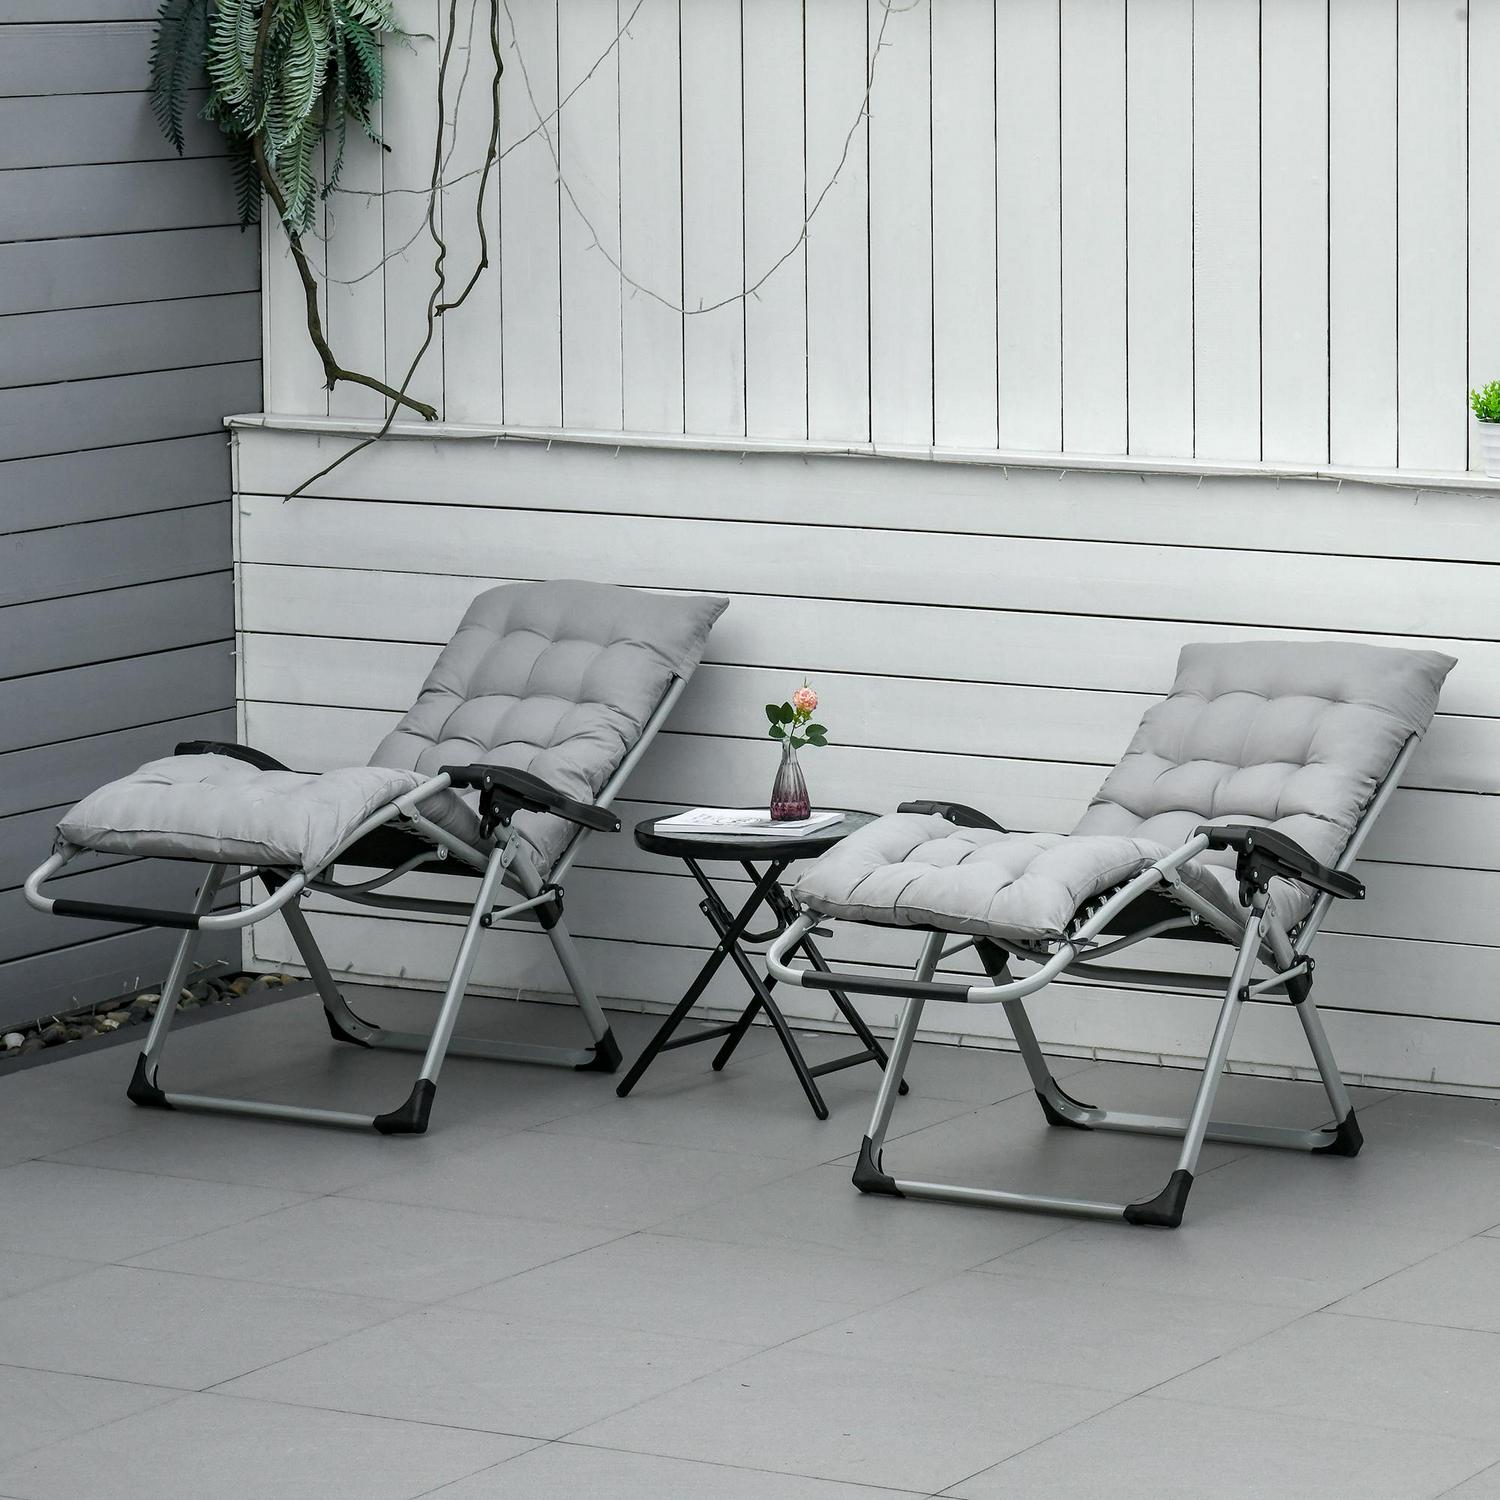 Reclining 2 PCS Zero Gravity Chair Folding Garden Lounger Cushion Light Grey